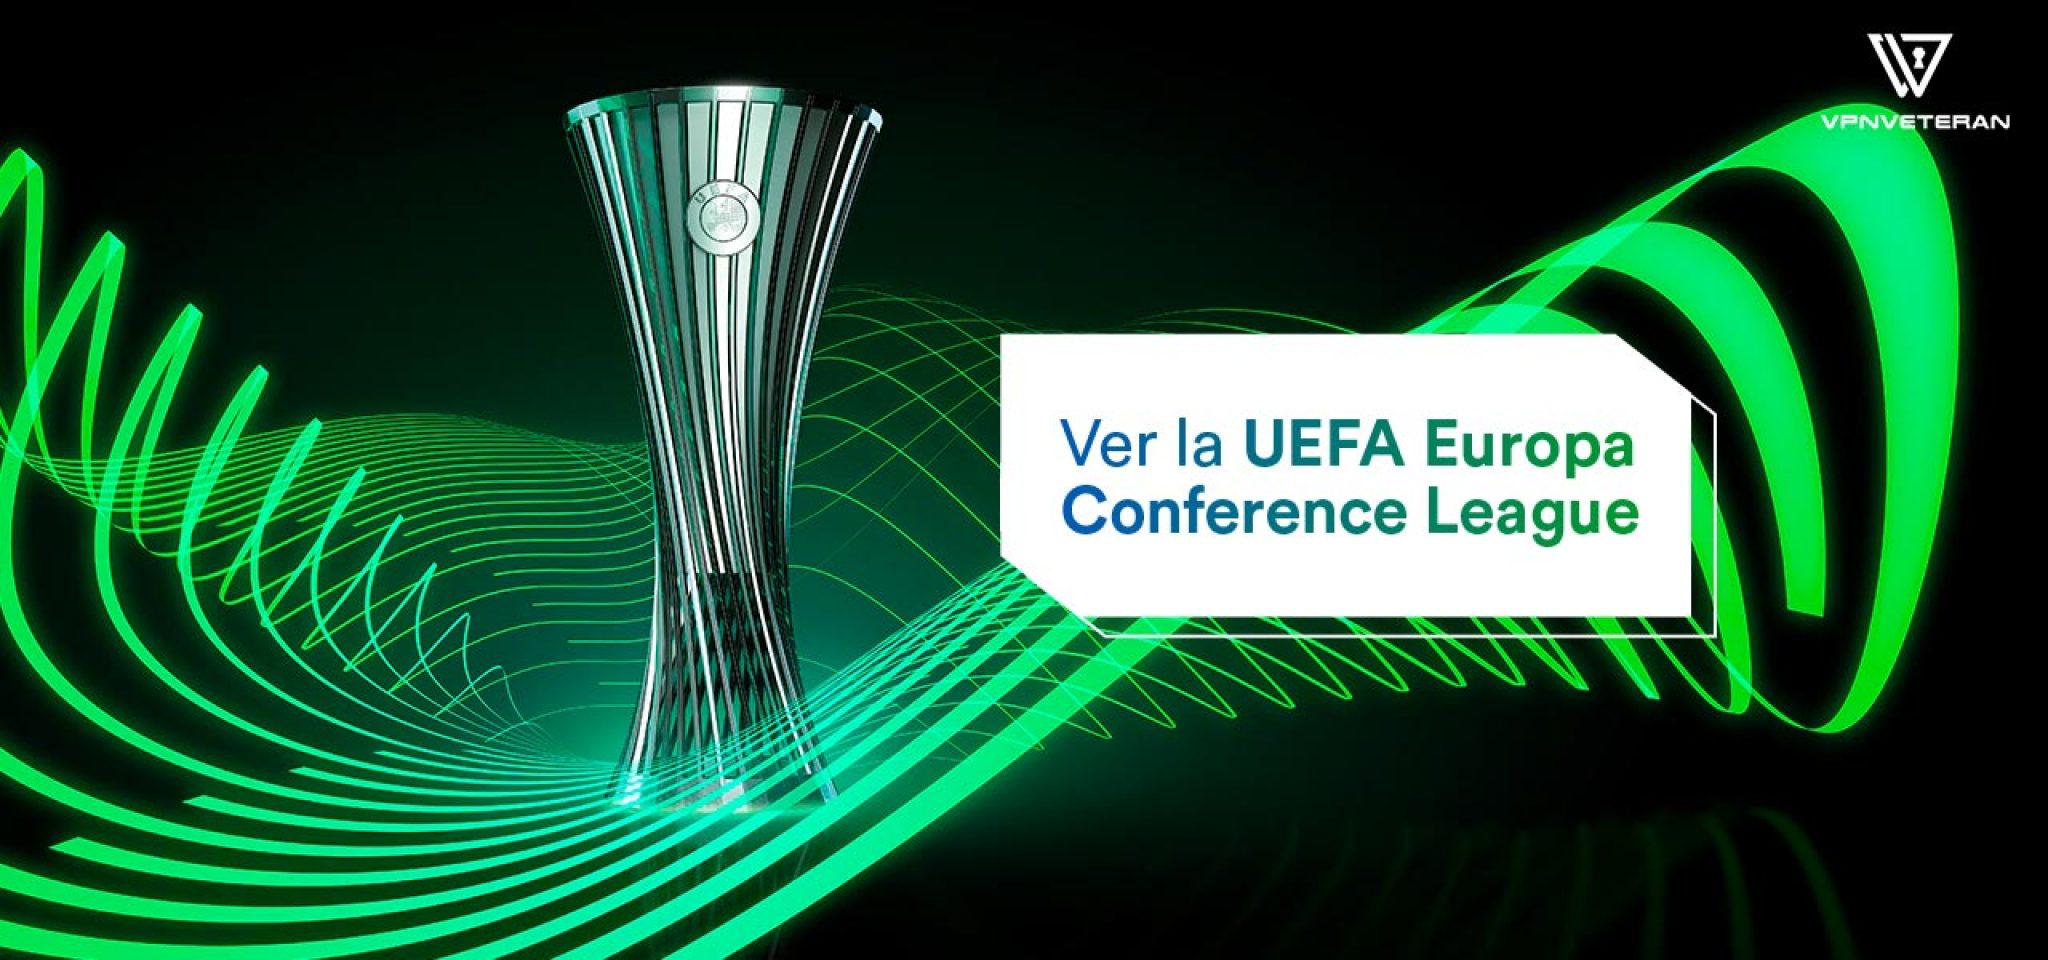 europa conference league fixtures